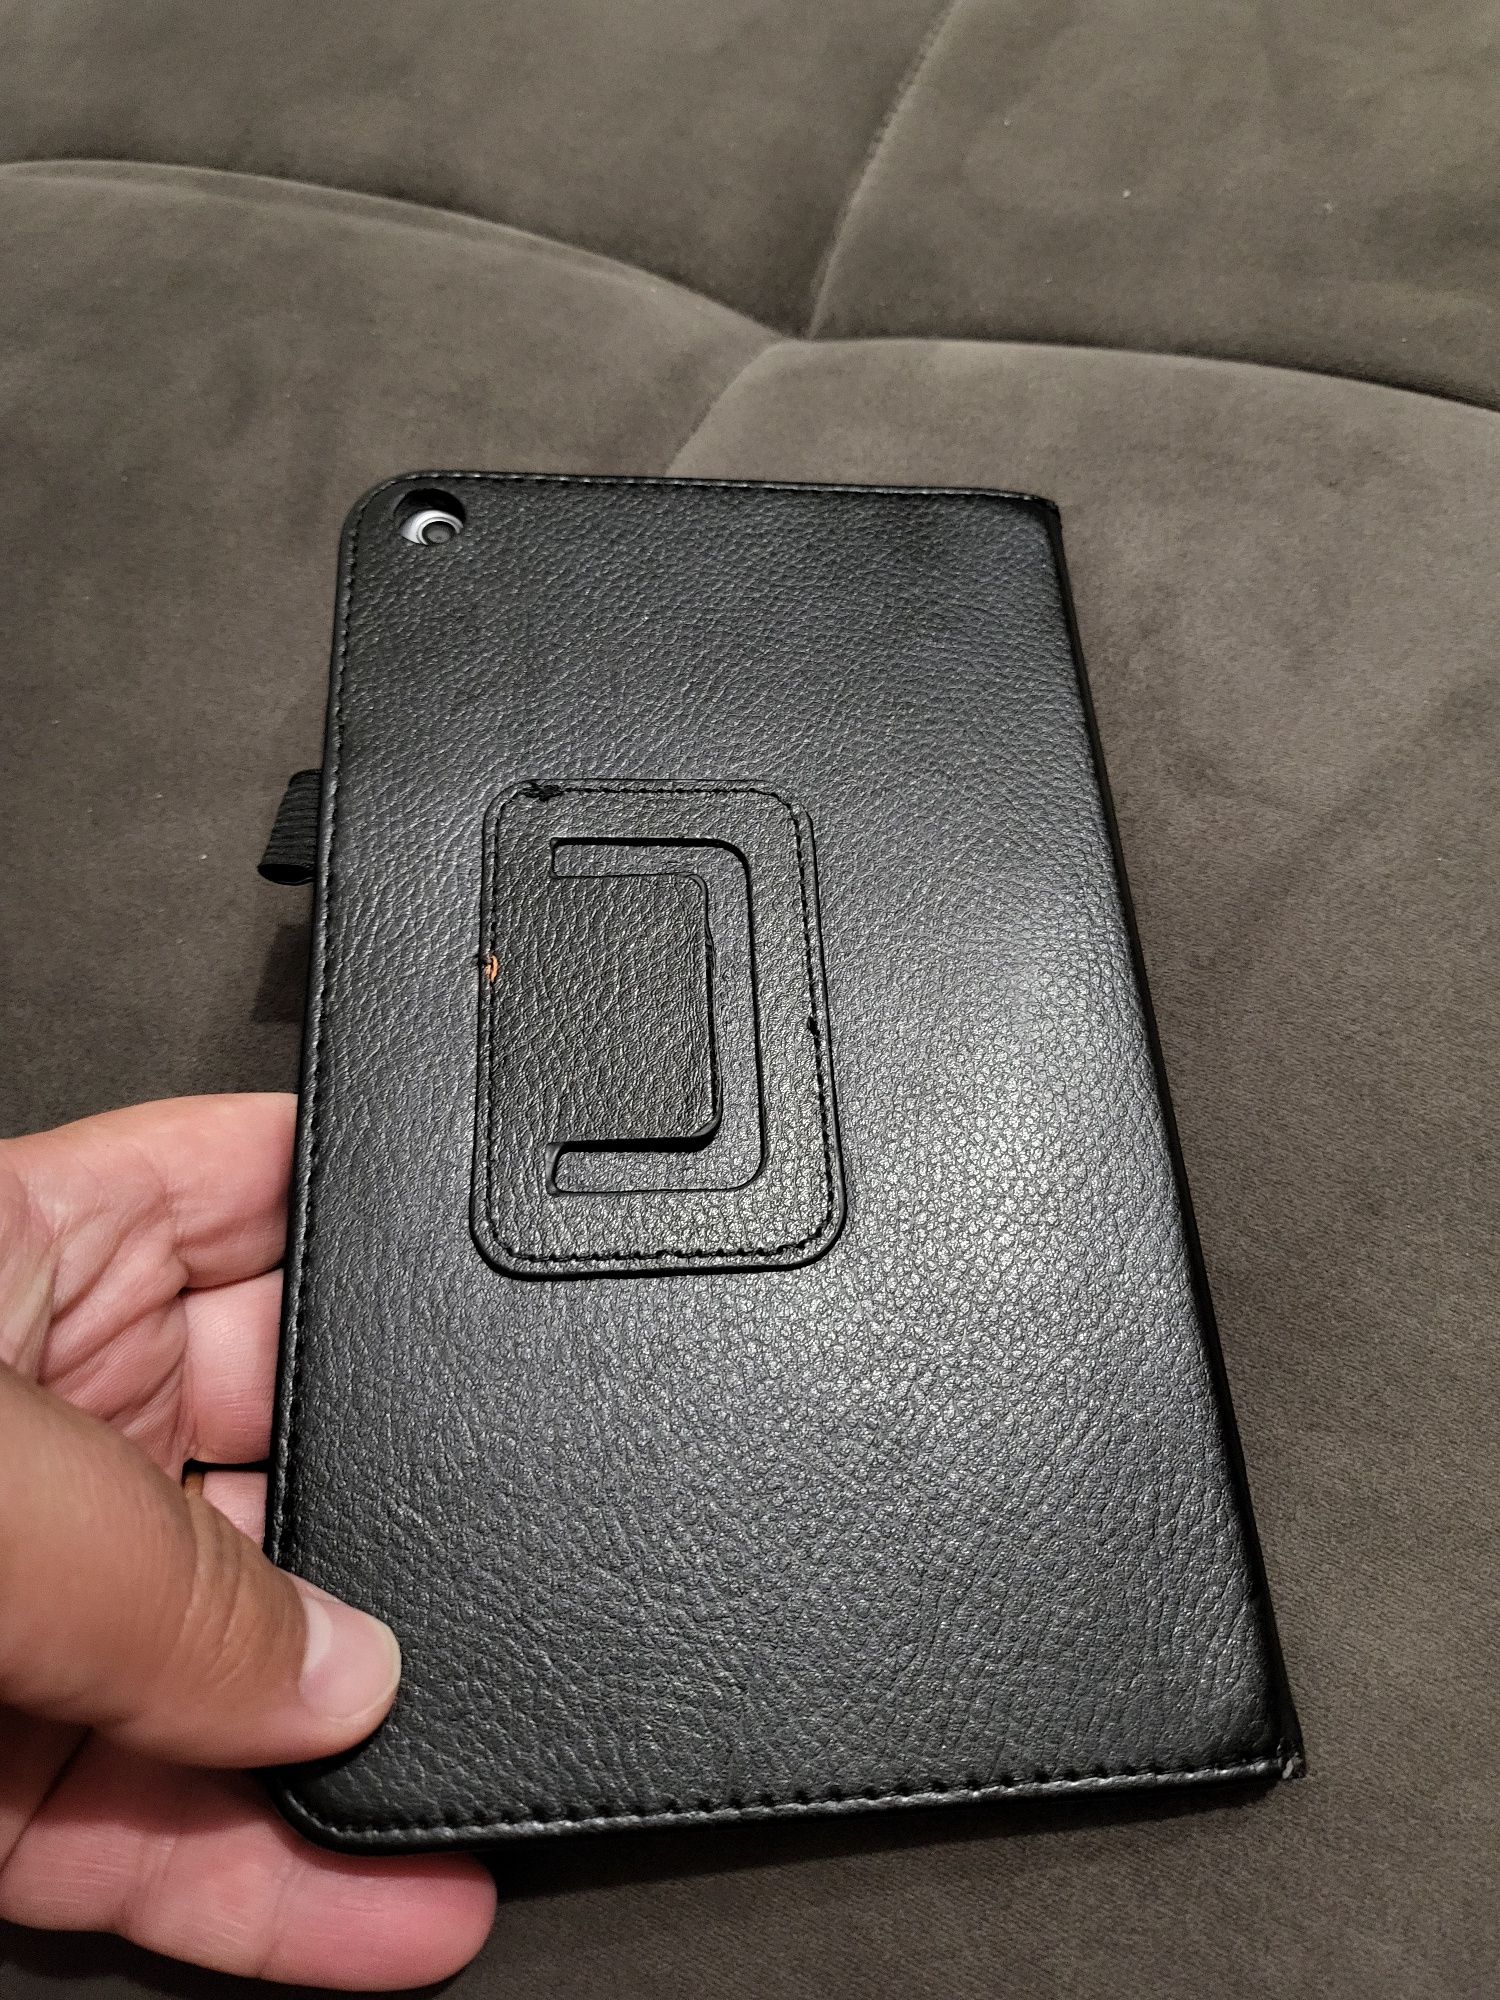 Vând tableta Huawei Pad T3, sim 4g,husa piele, folie